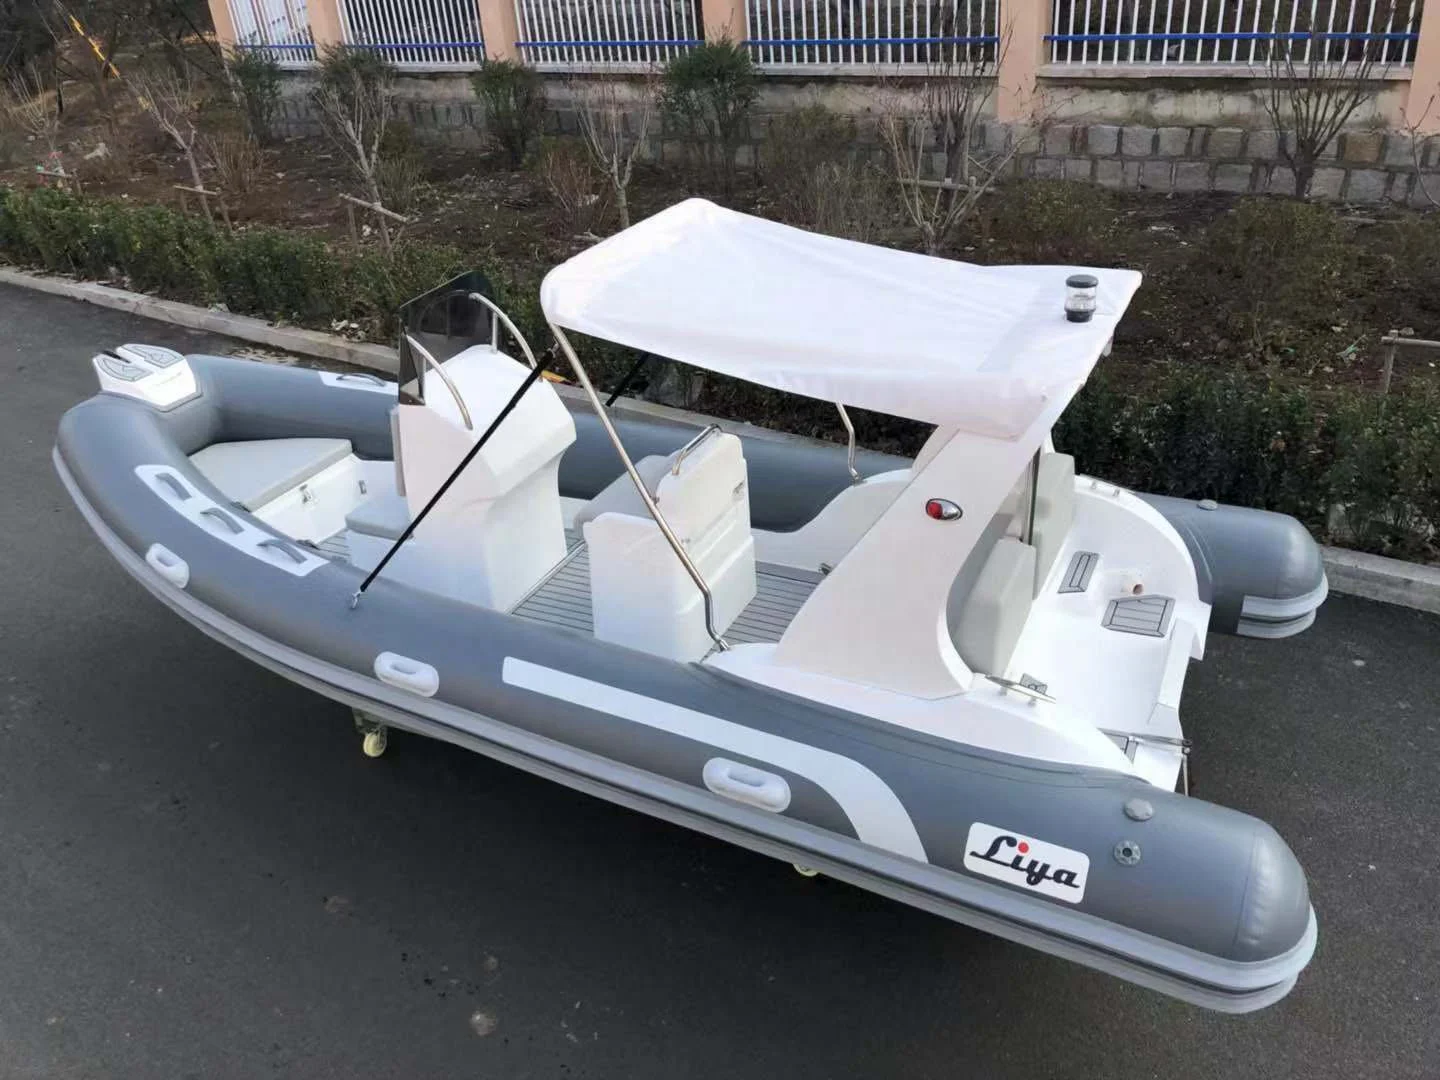 
Liya 70-90horse power yacht luxury rib boat rigid inflatable boat 